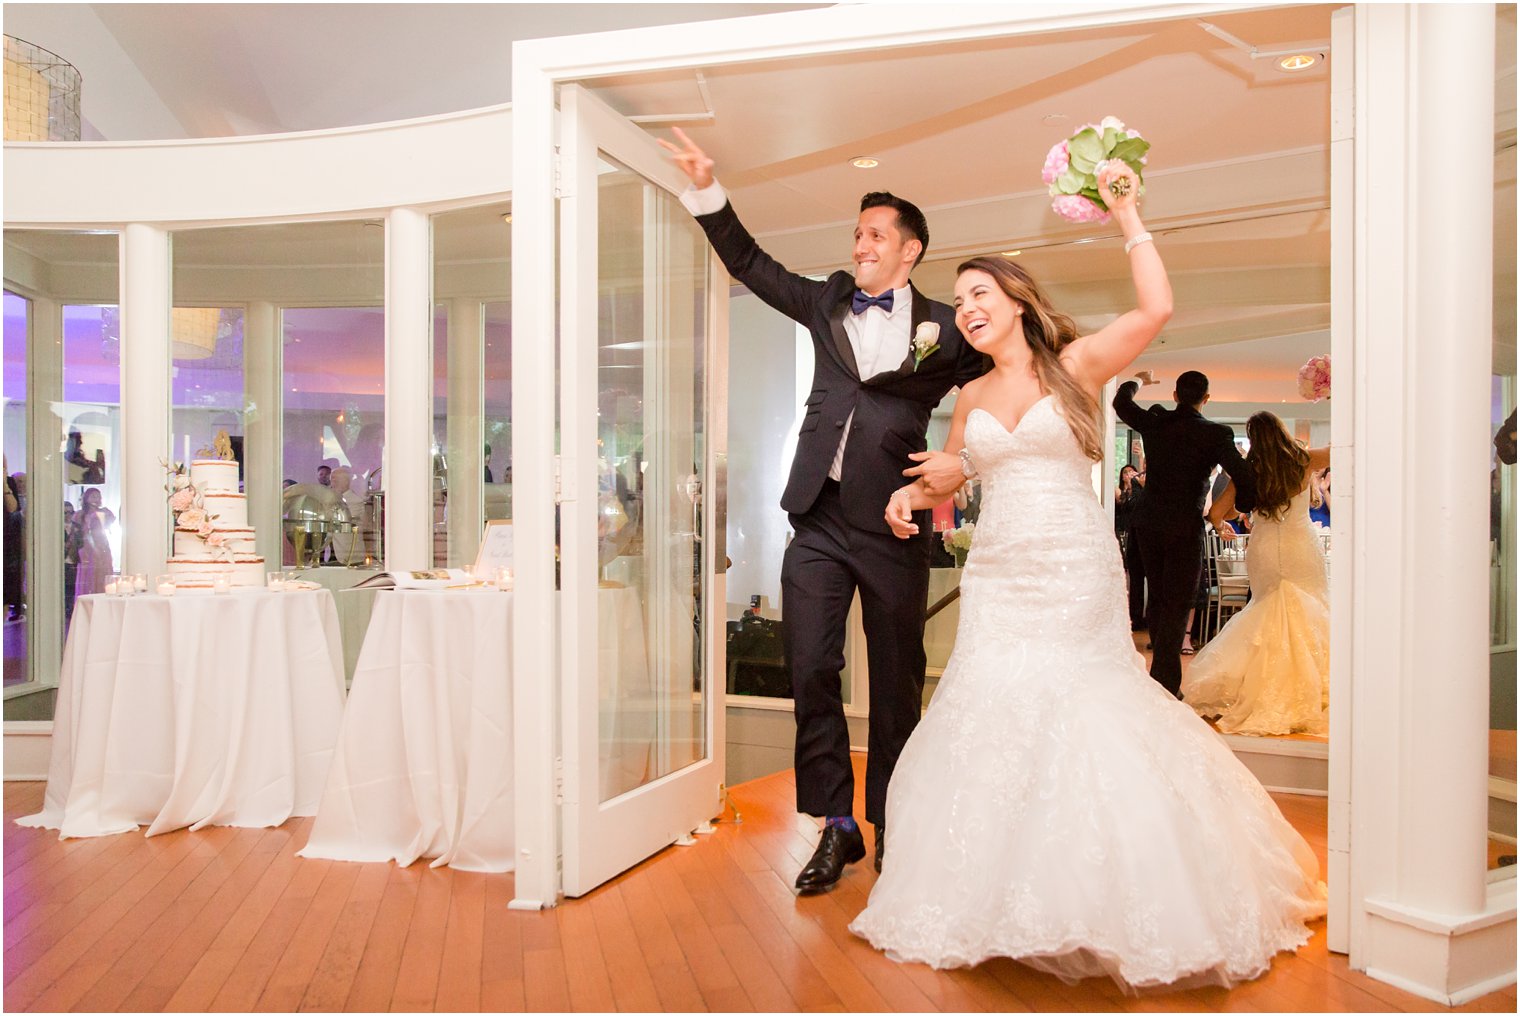 Bride and groom entrance into reception | Photos by Idalia Photography